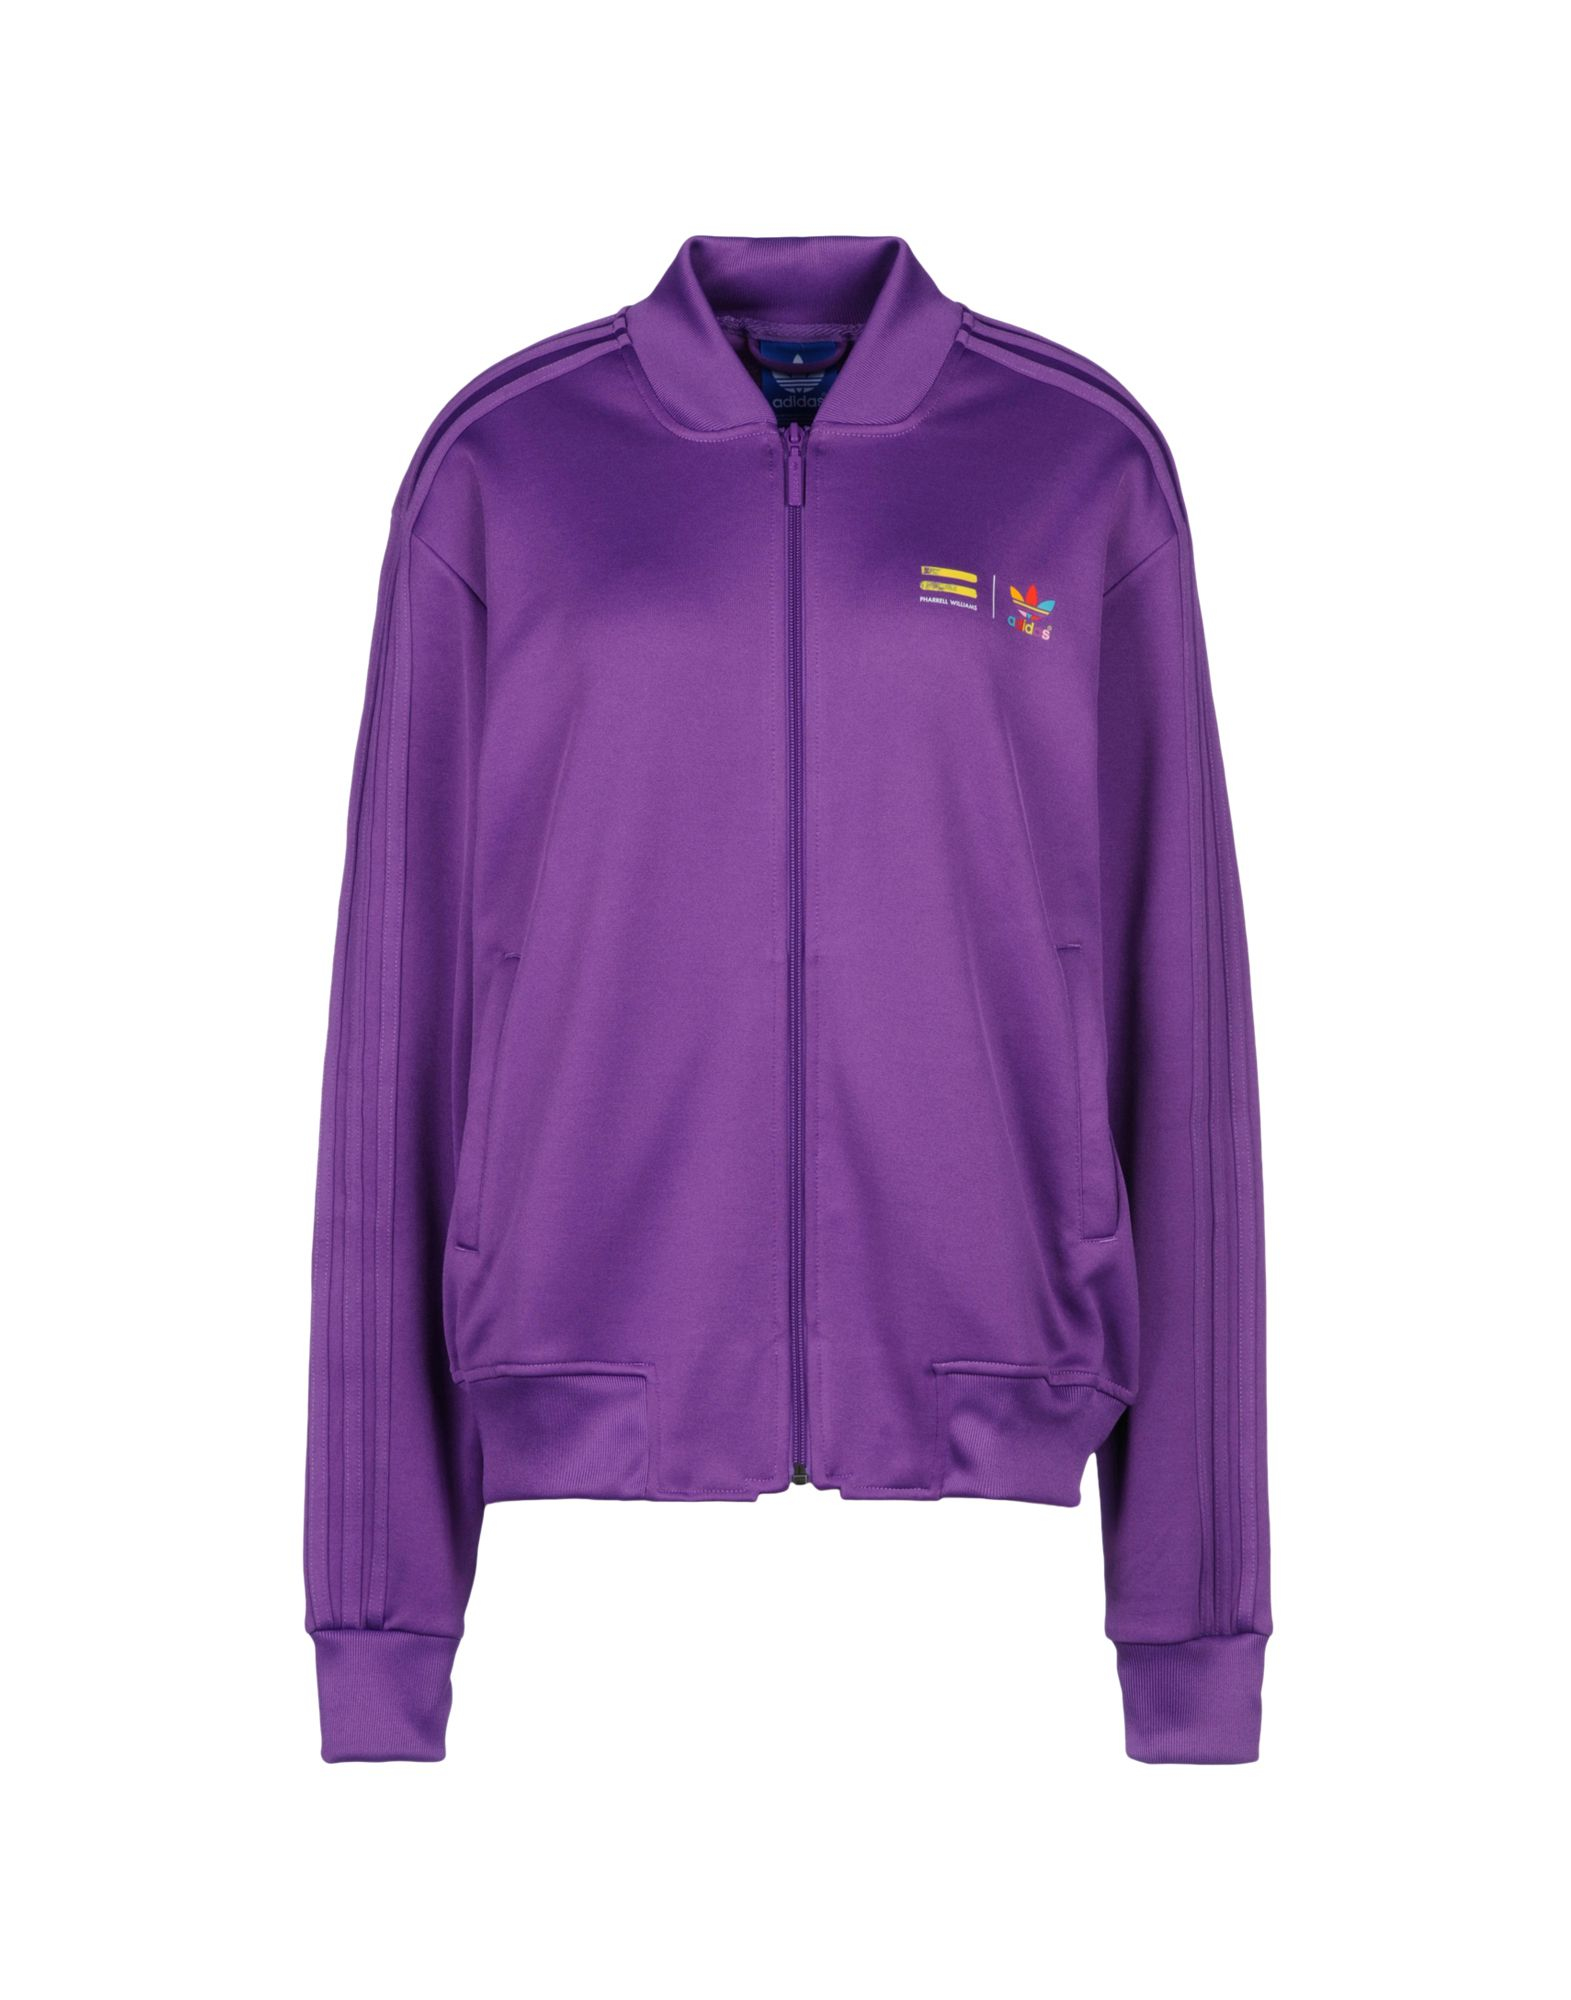 adidas Originals Synthetic Sweatshirt in Purple - Lyst